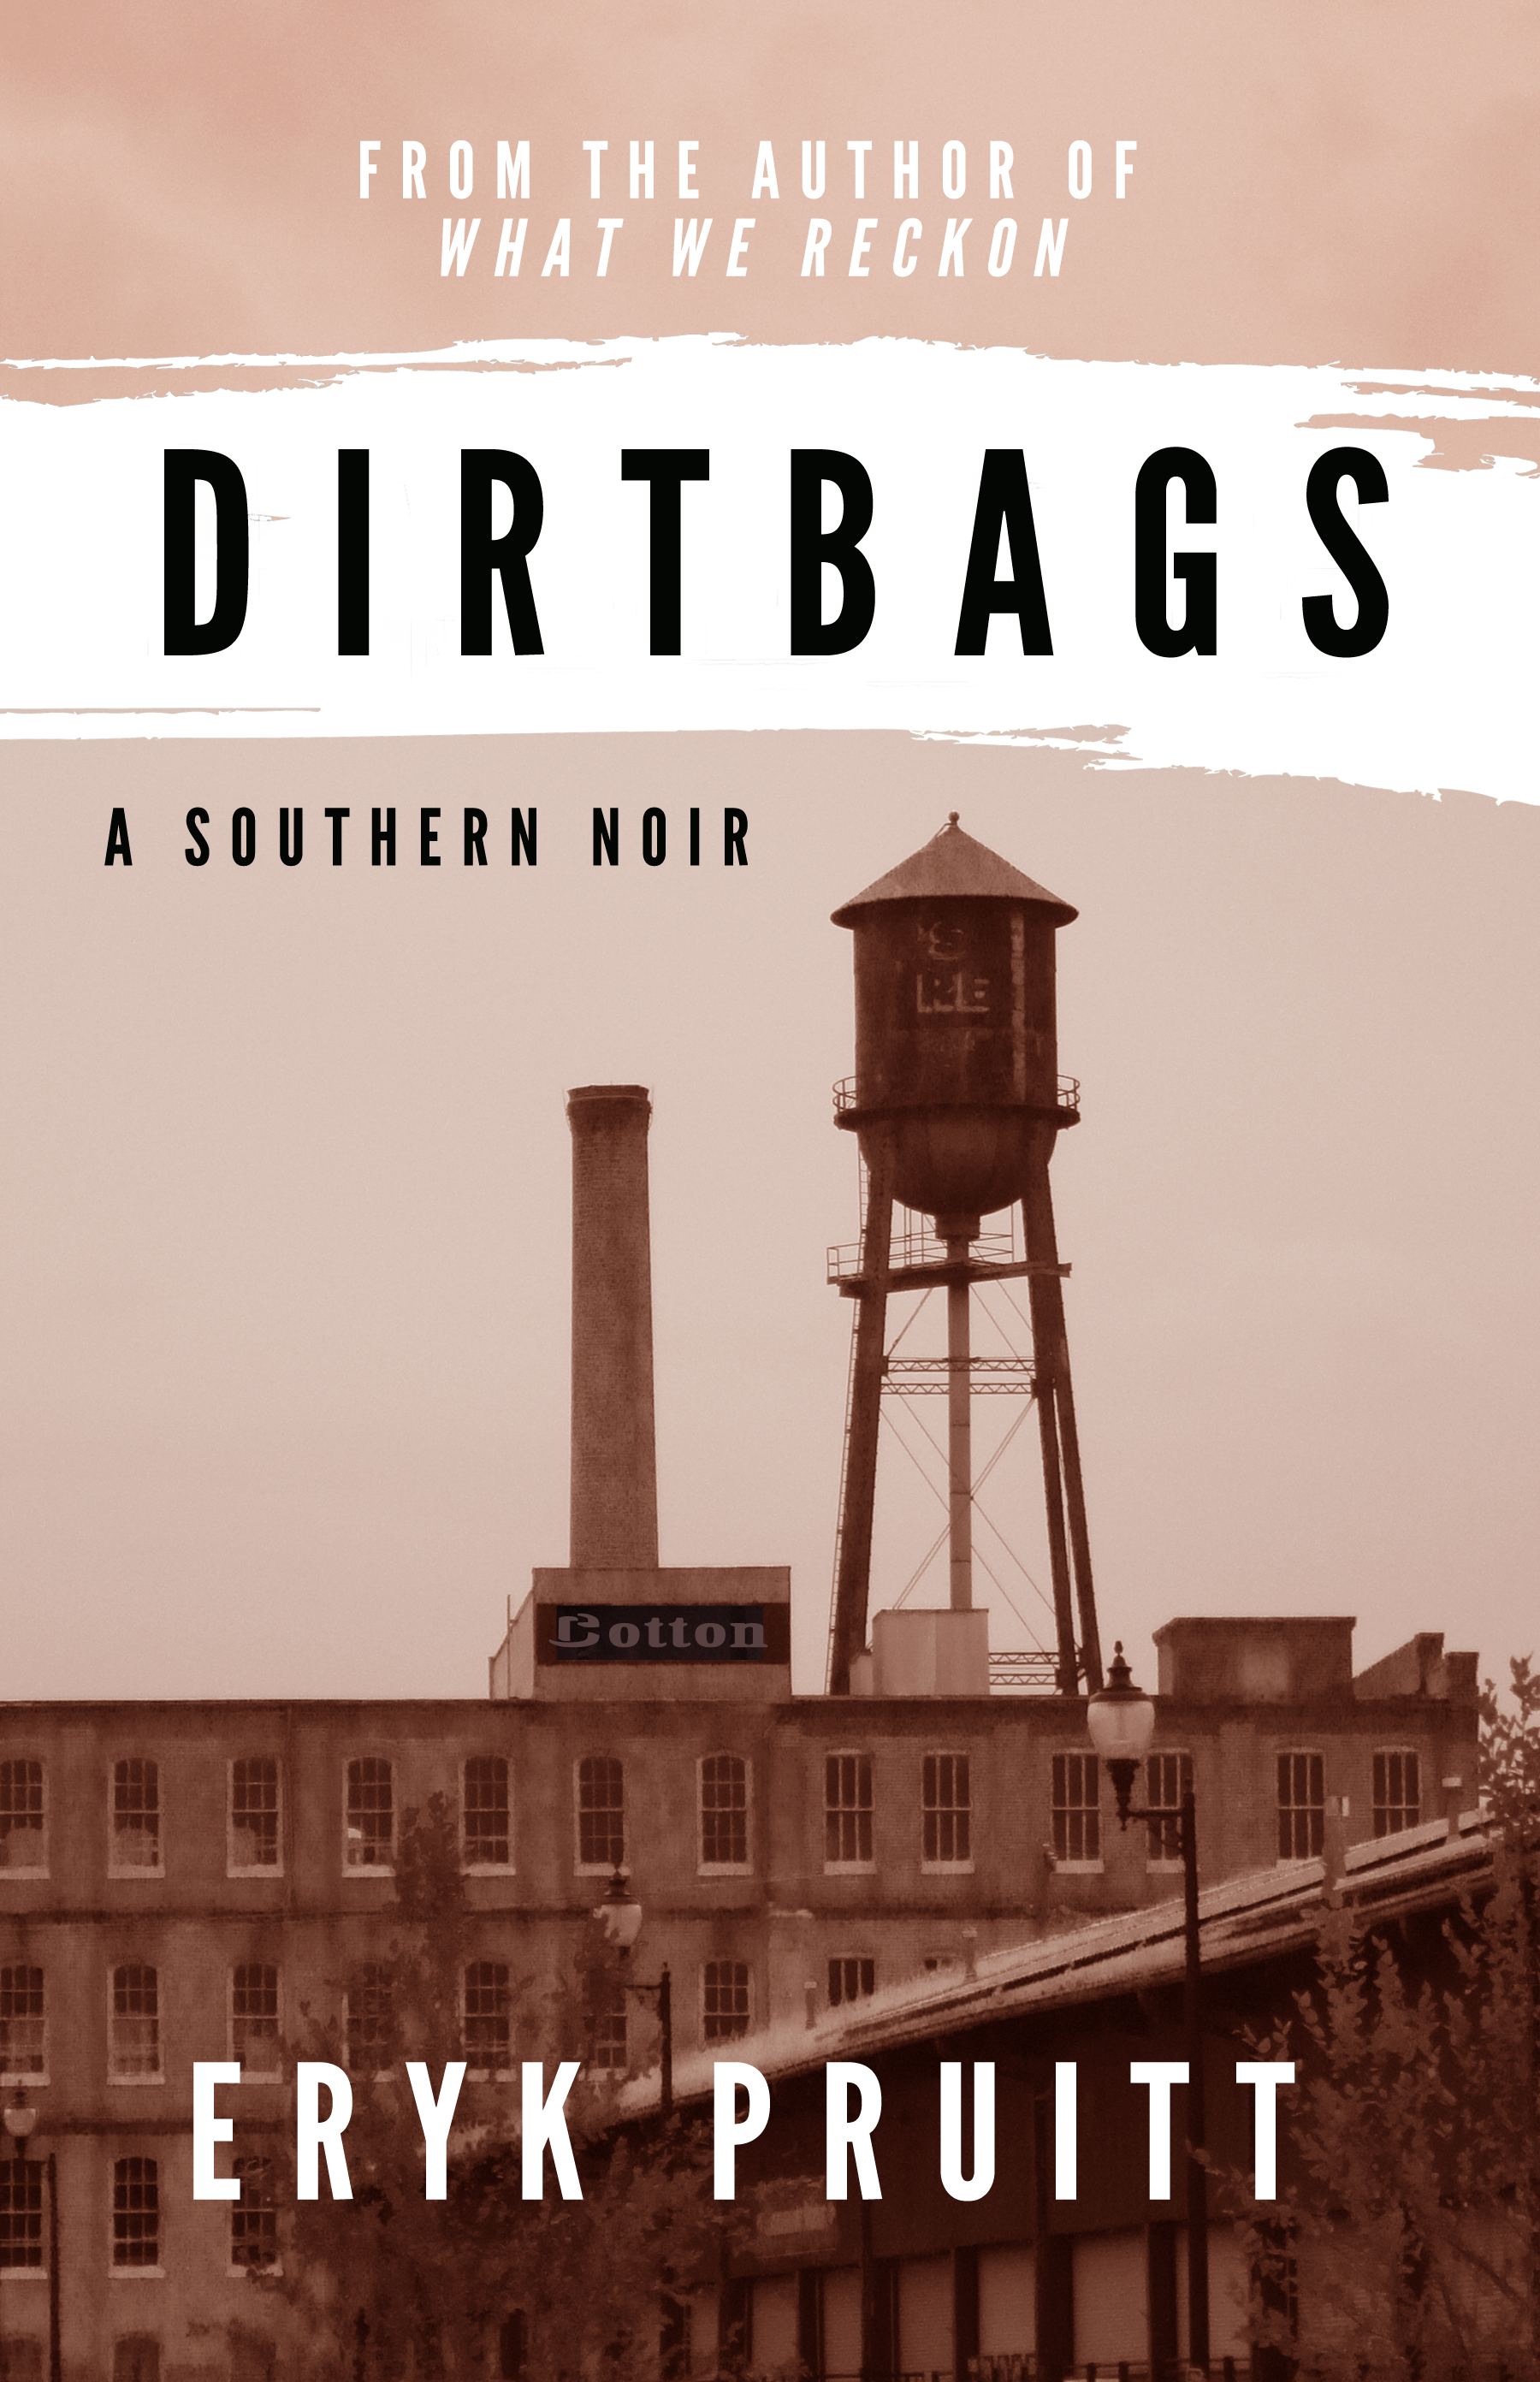 Dirtbags, the novel